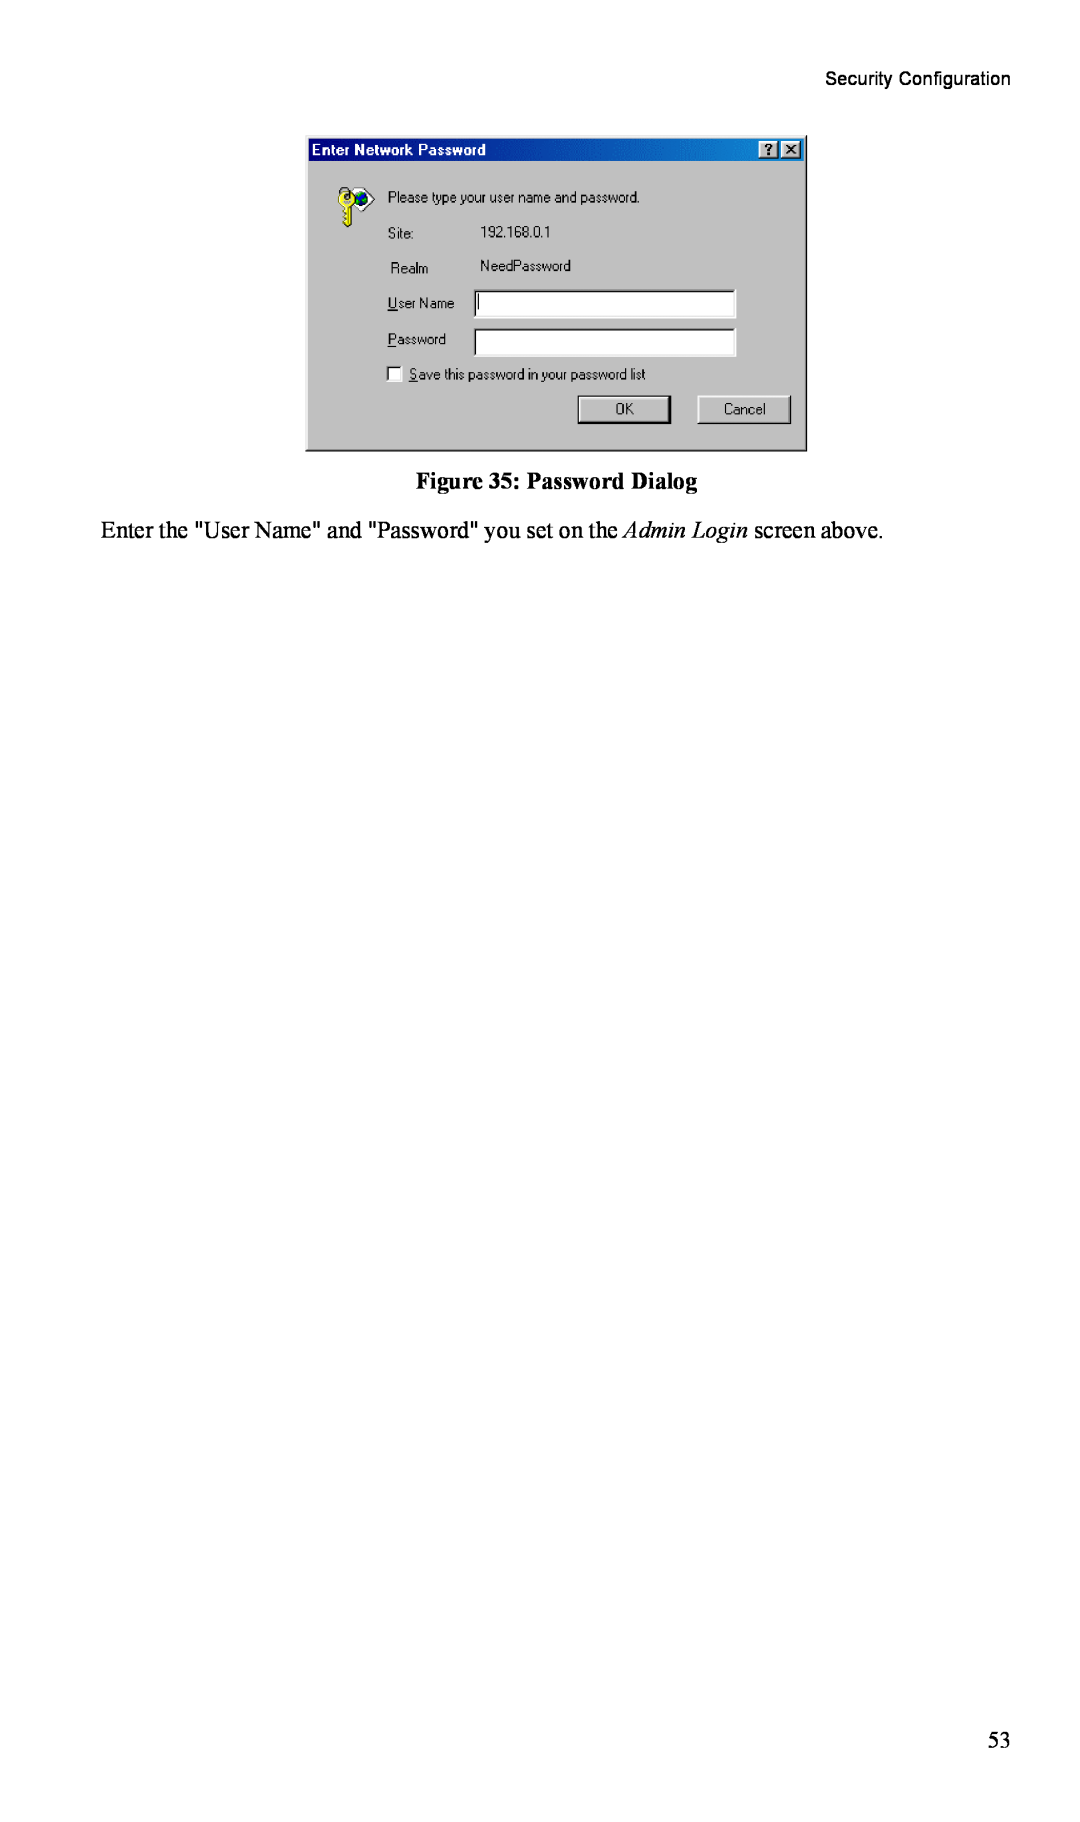 TRENDnet TW100-BRV204, VPN Firewall Router manual Password Dialog, Security Configuration 